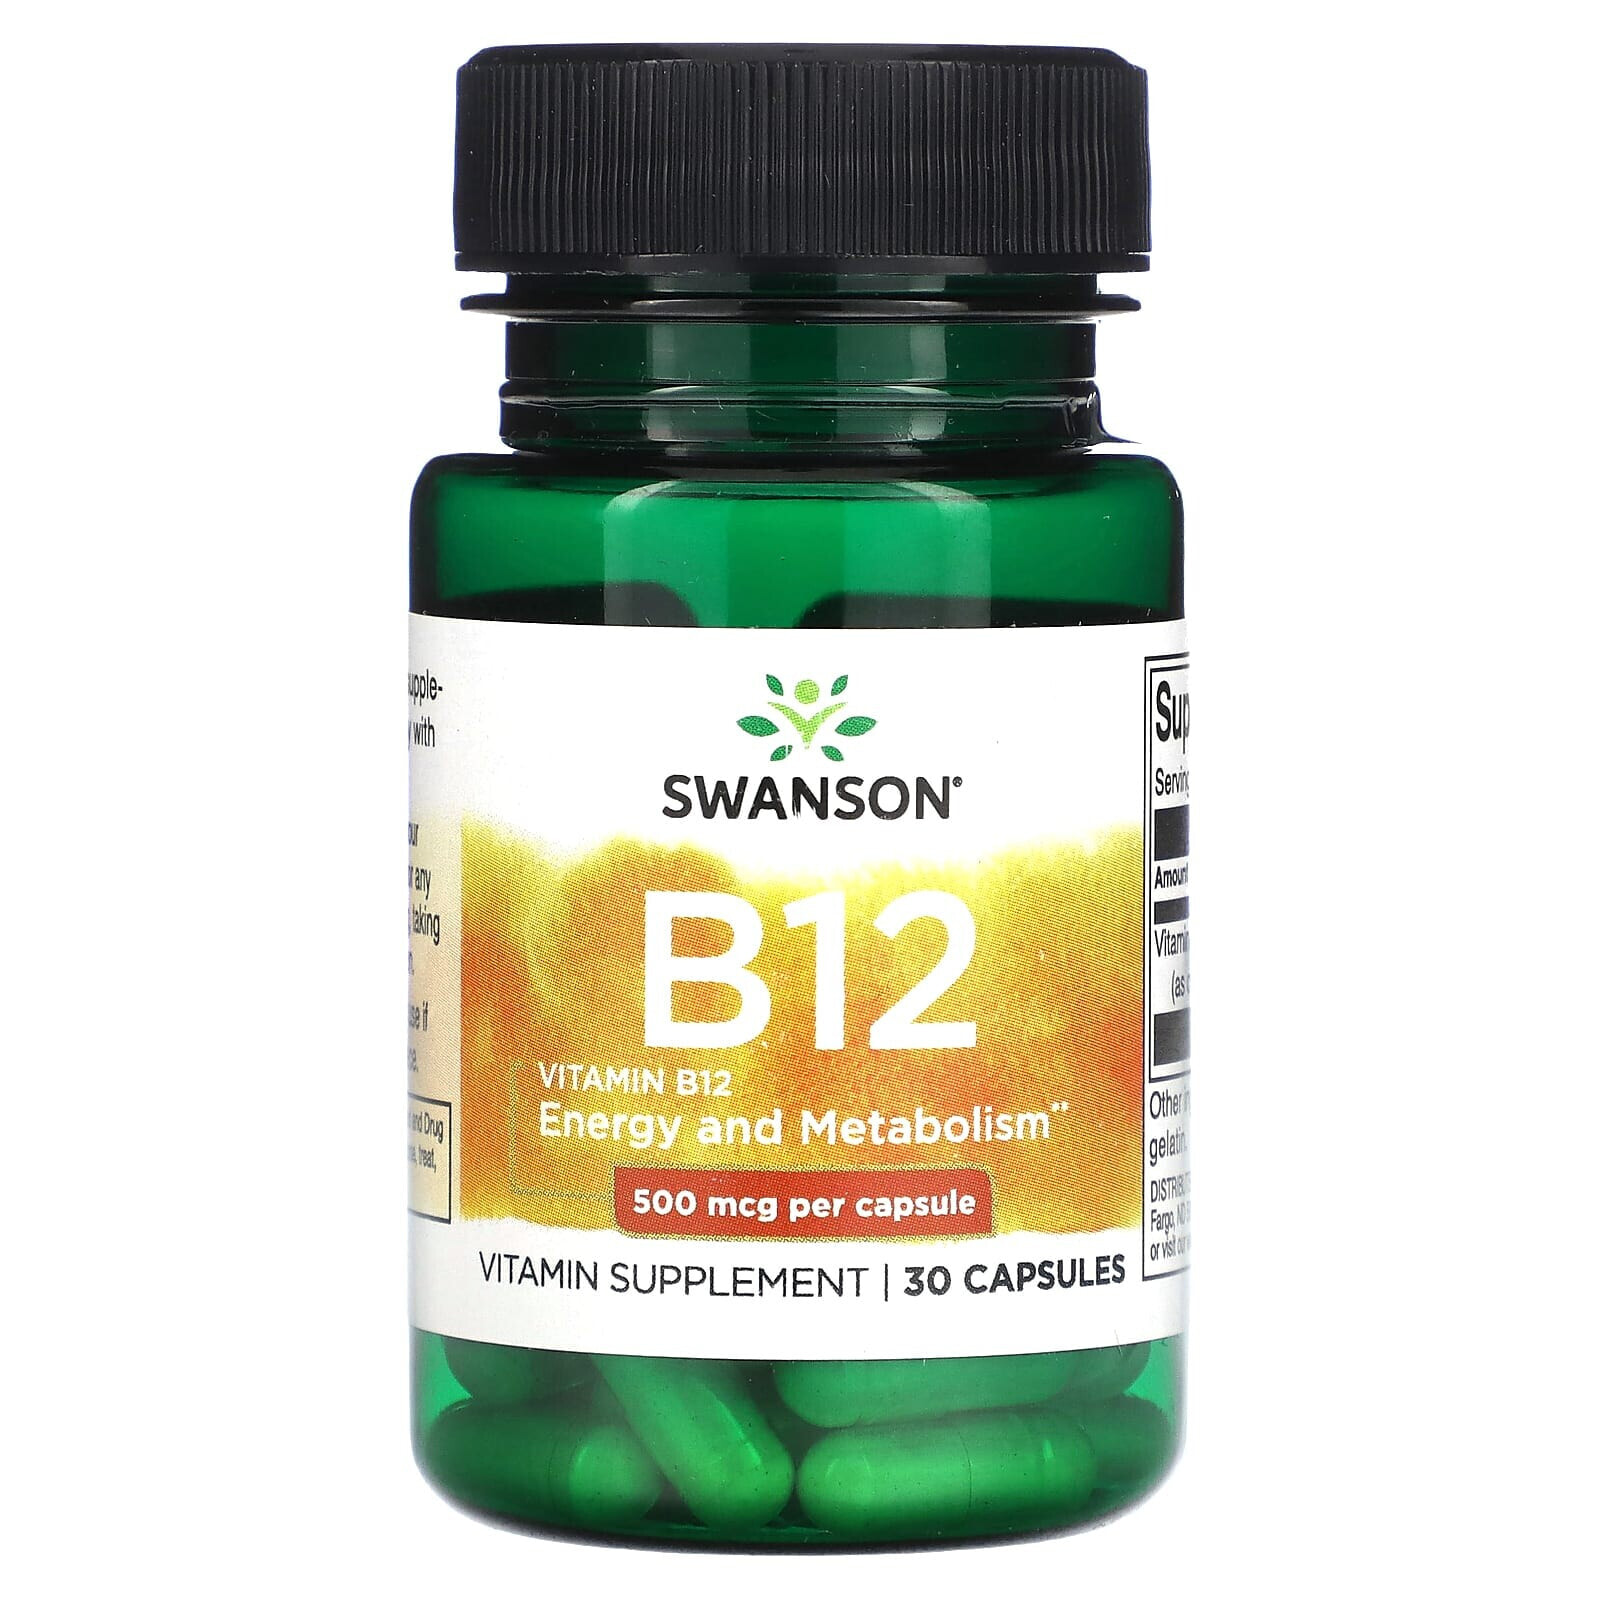 Swanson, Vitamin B12, 500 mg, 100 Capsules